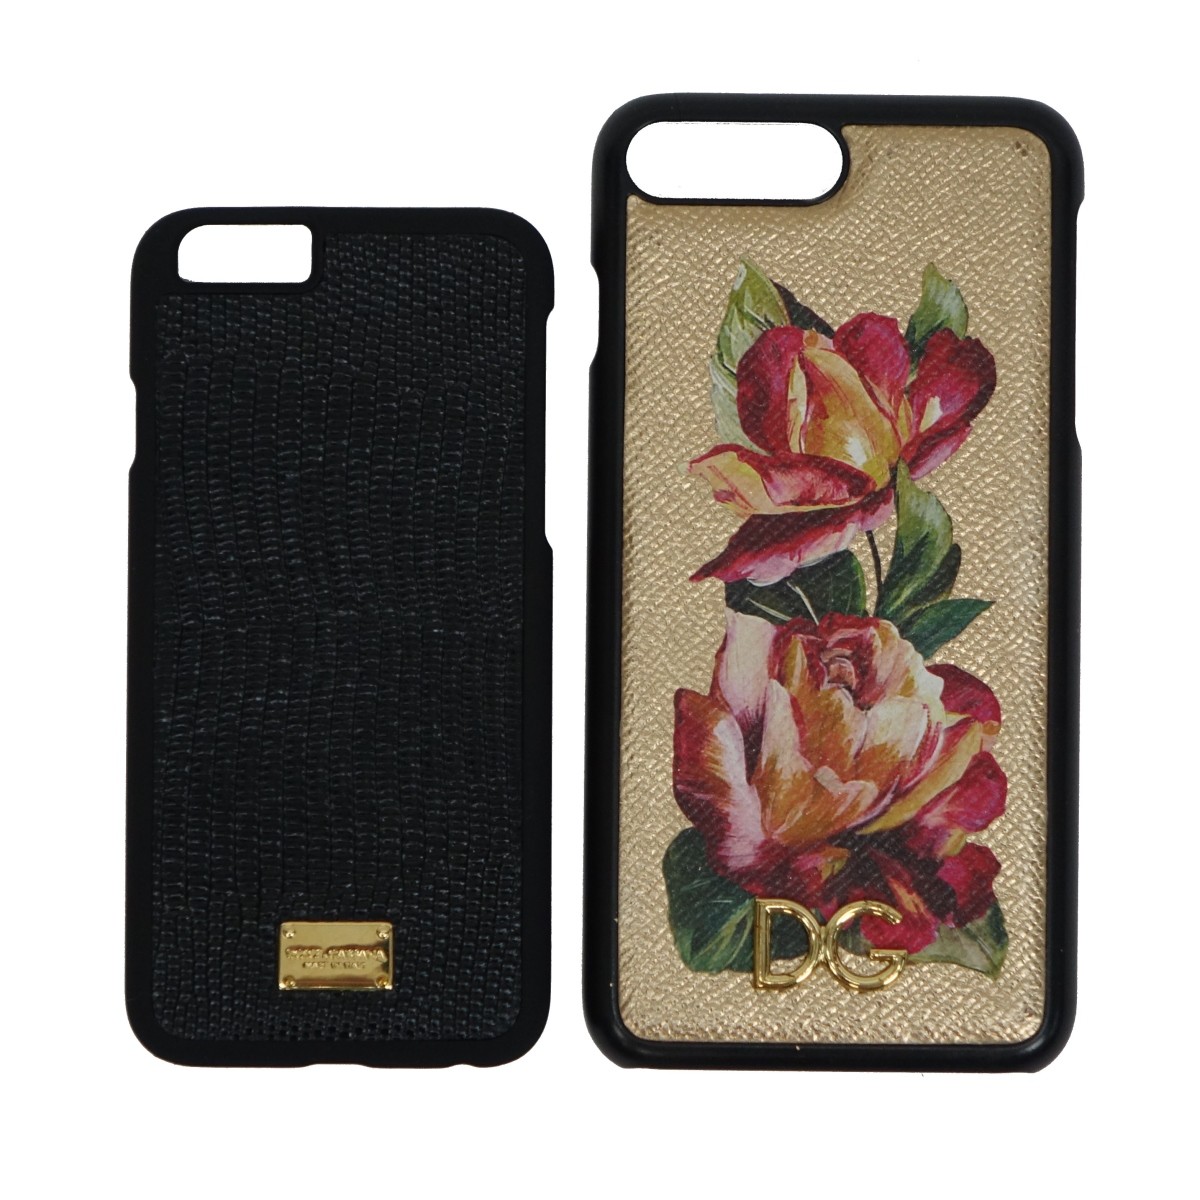 Dolce & Gabbana Iphone Cases